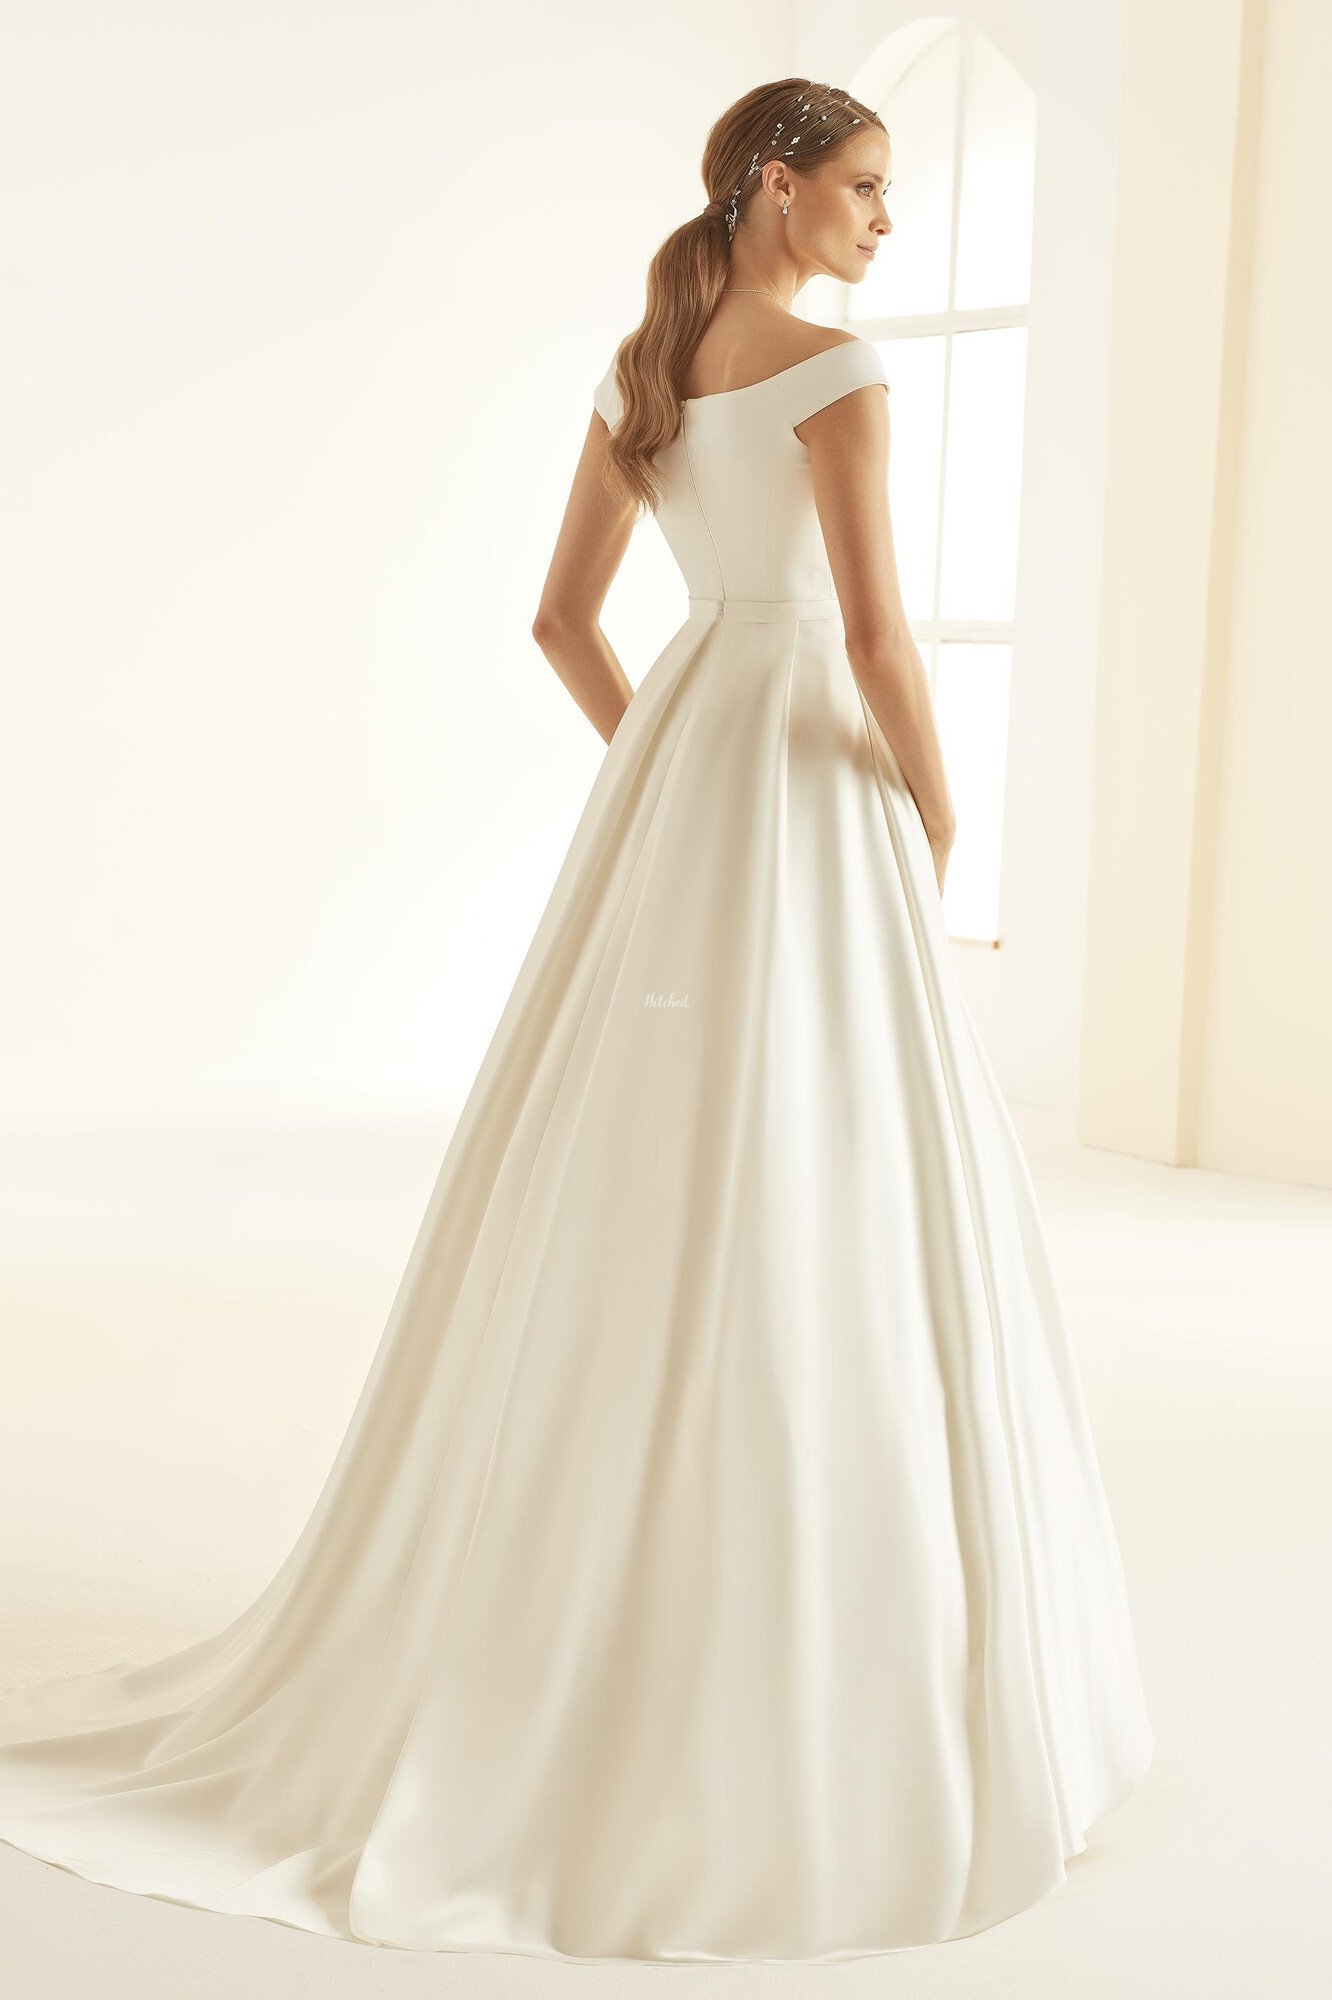 Esmeralda Wedding Dress from Bianco Evento - hitched.co.uk